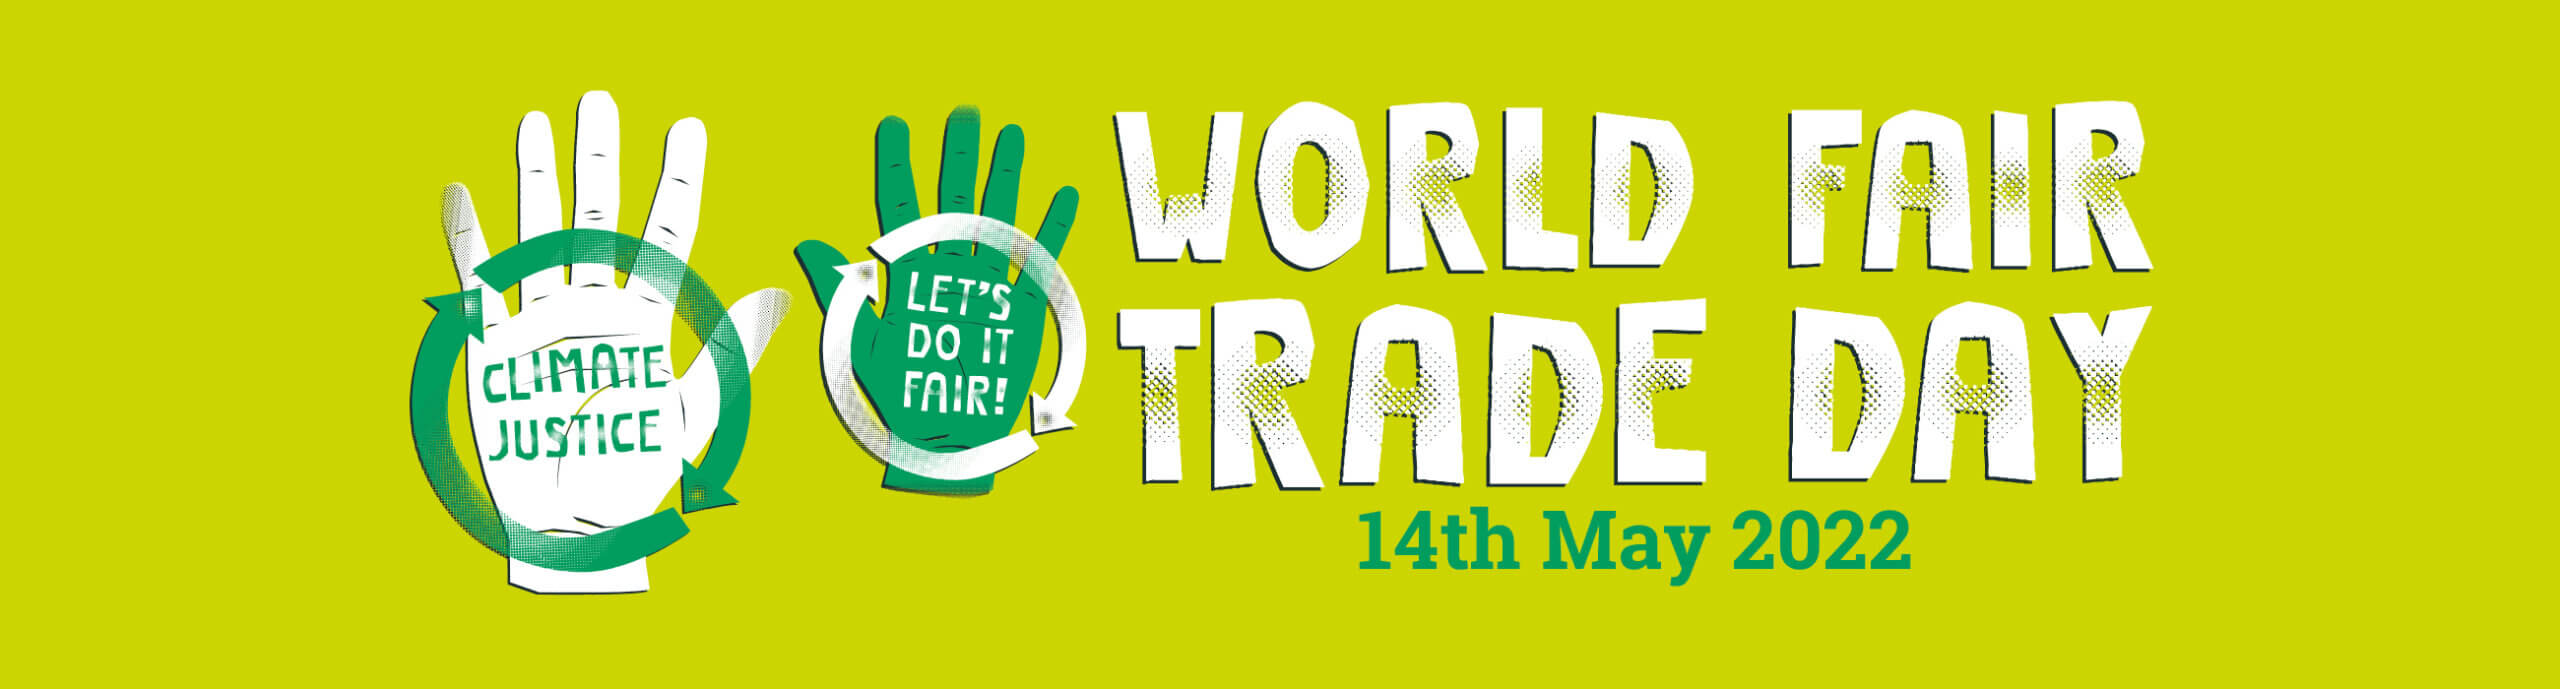 World Fair Trade Day 2022 banners_2600x700_04